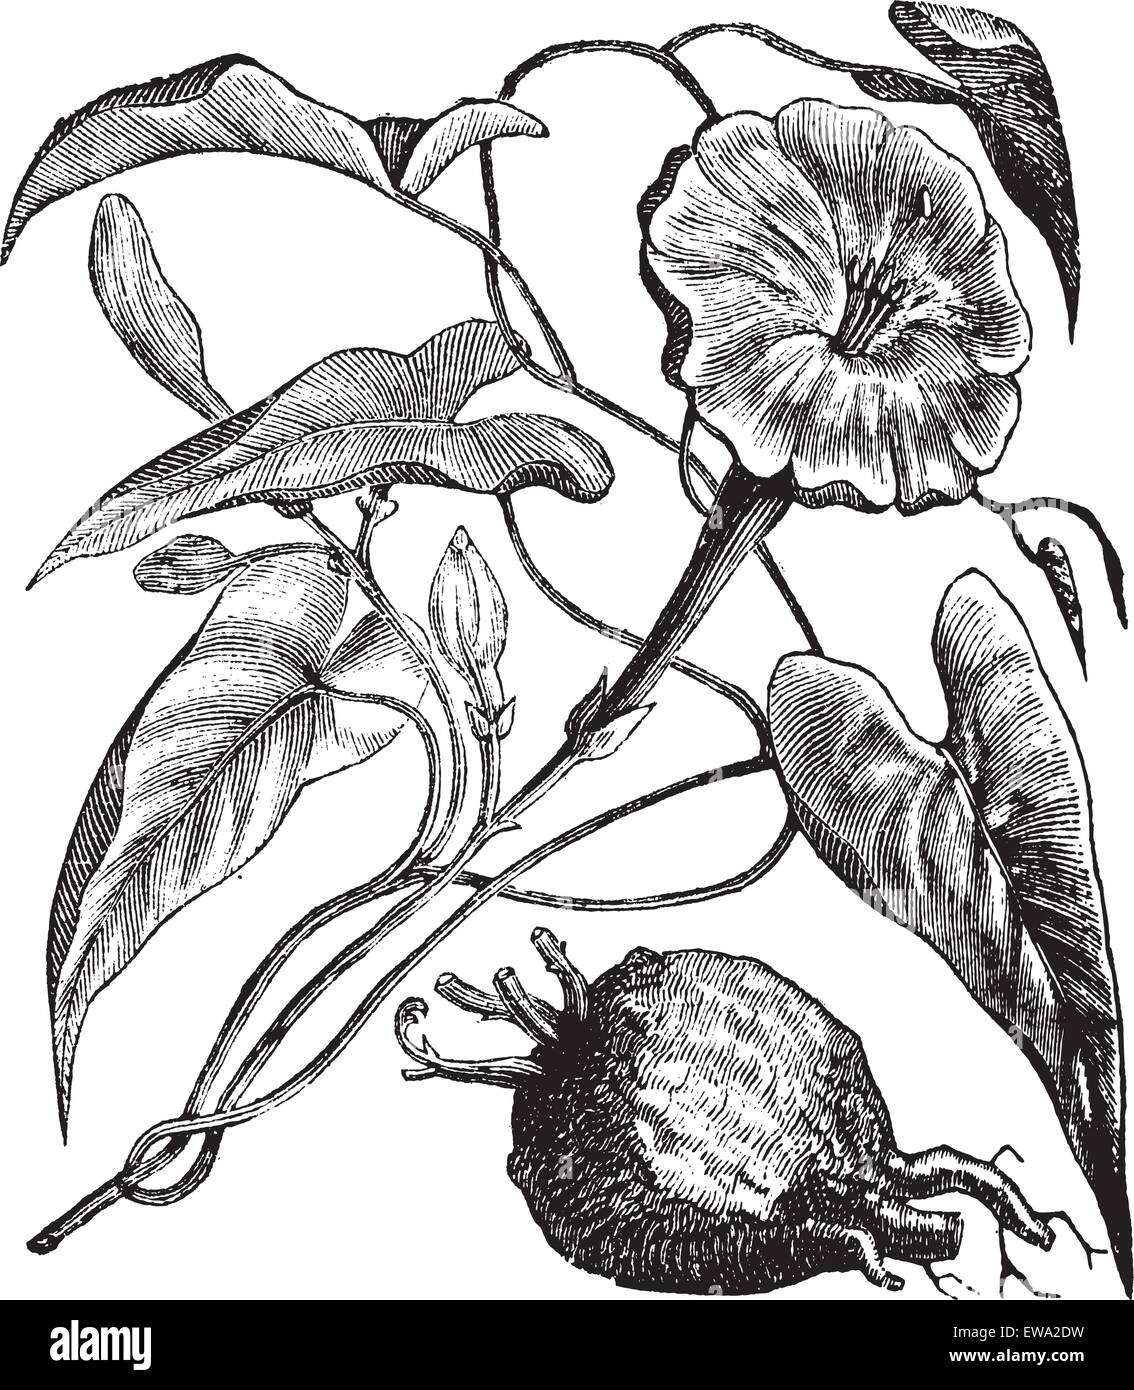 Exogonium purga or Ipomoea jalapa or Ipomoea or Jalap Bindweed or Jalapa, vintage engraving. Old engraved illustration of Exogonium purga isolated on a white background. Stock Vector